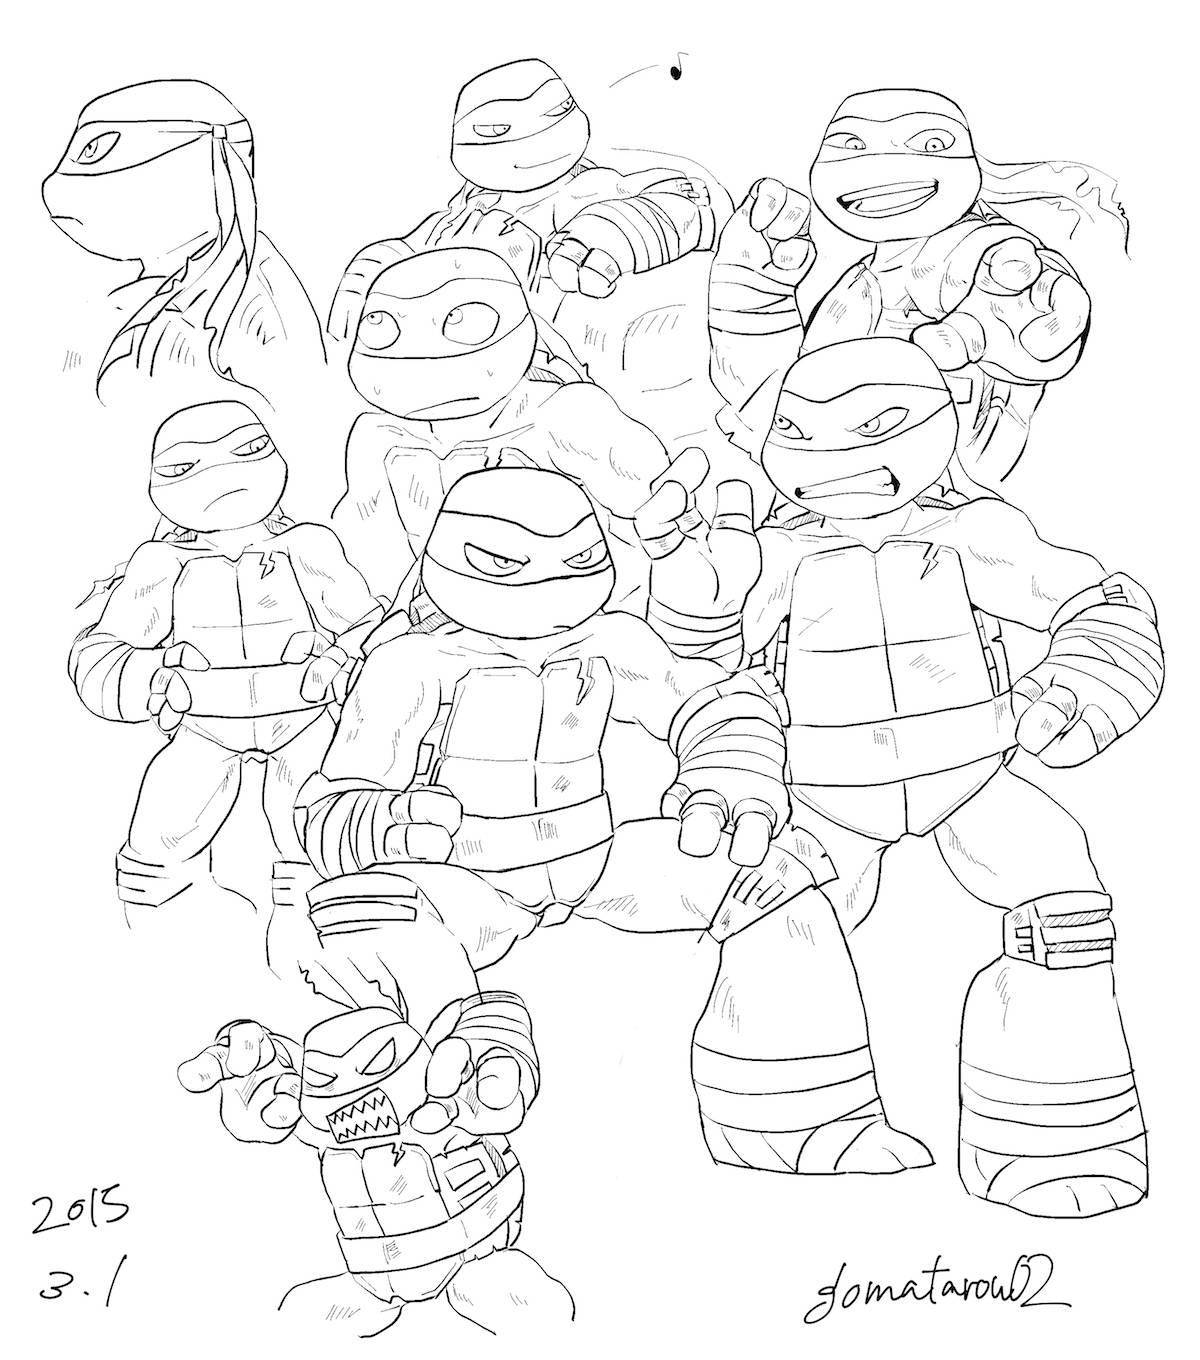 Joyful Teenage Mutant Ninja Turtles 2012 coloring book